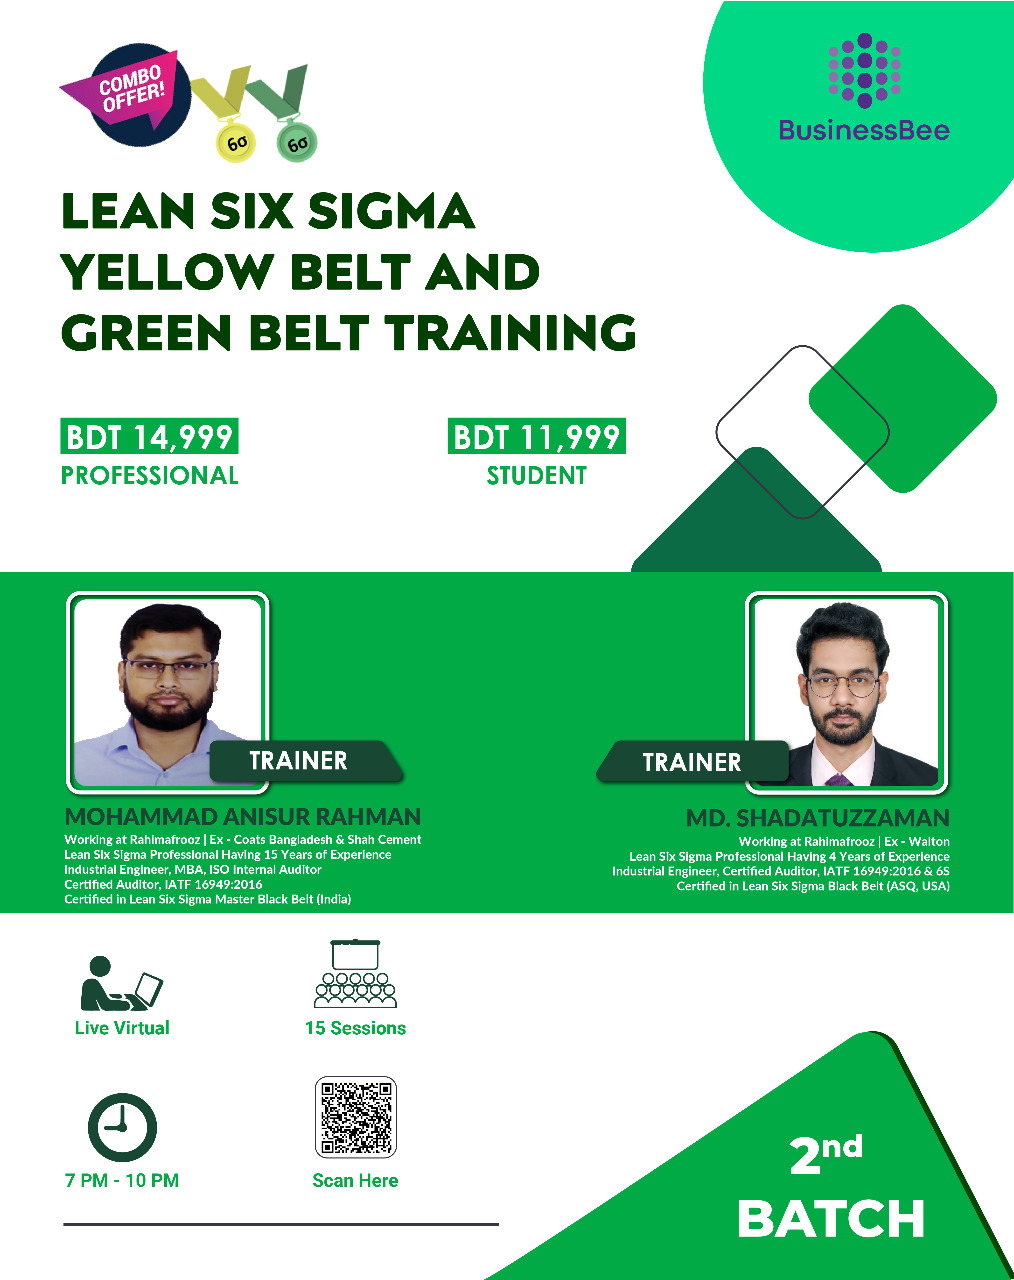 Lean Six Sigma Yellow Belt and Green Belt Training Combined 